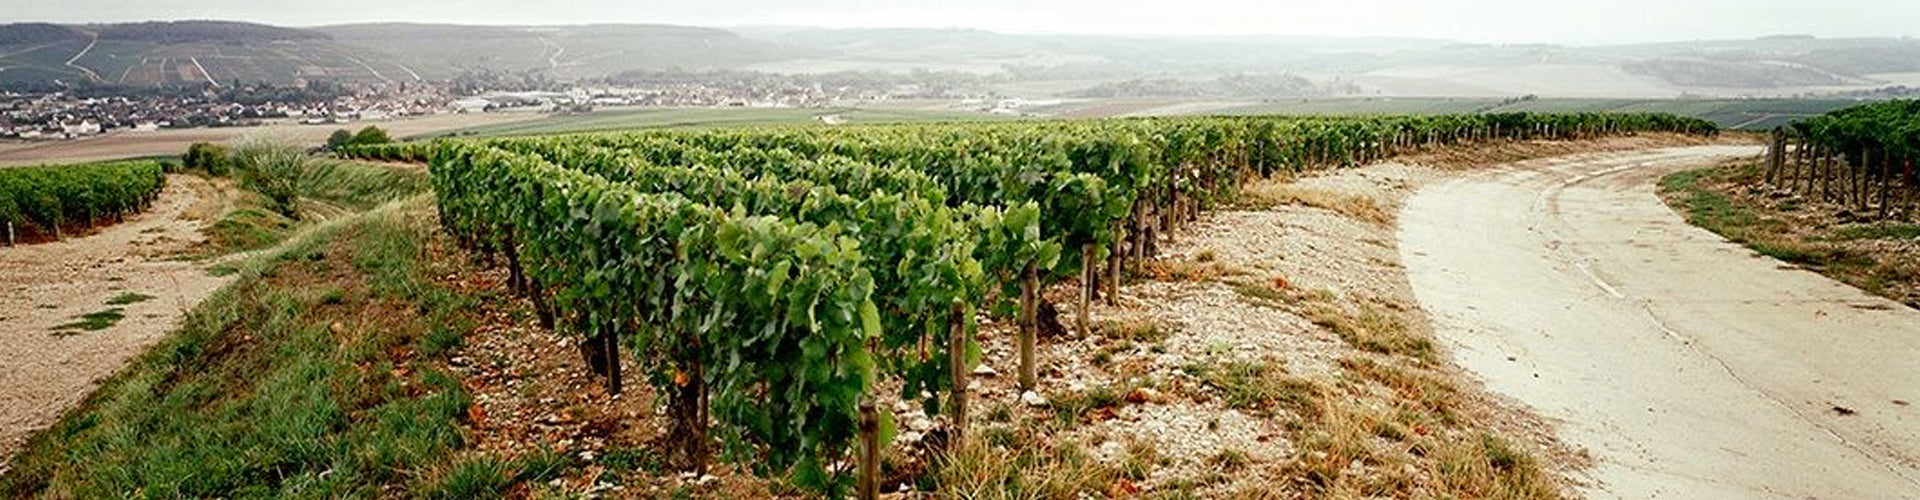 Chablis Vineyards in Burgundy, France